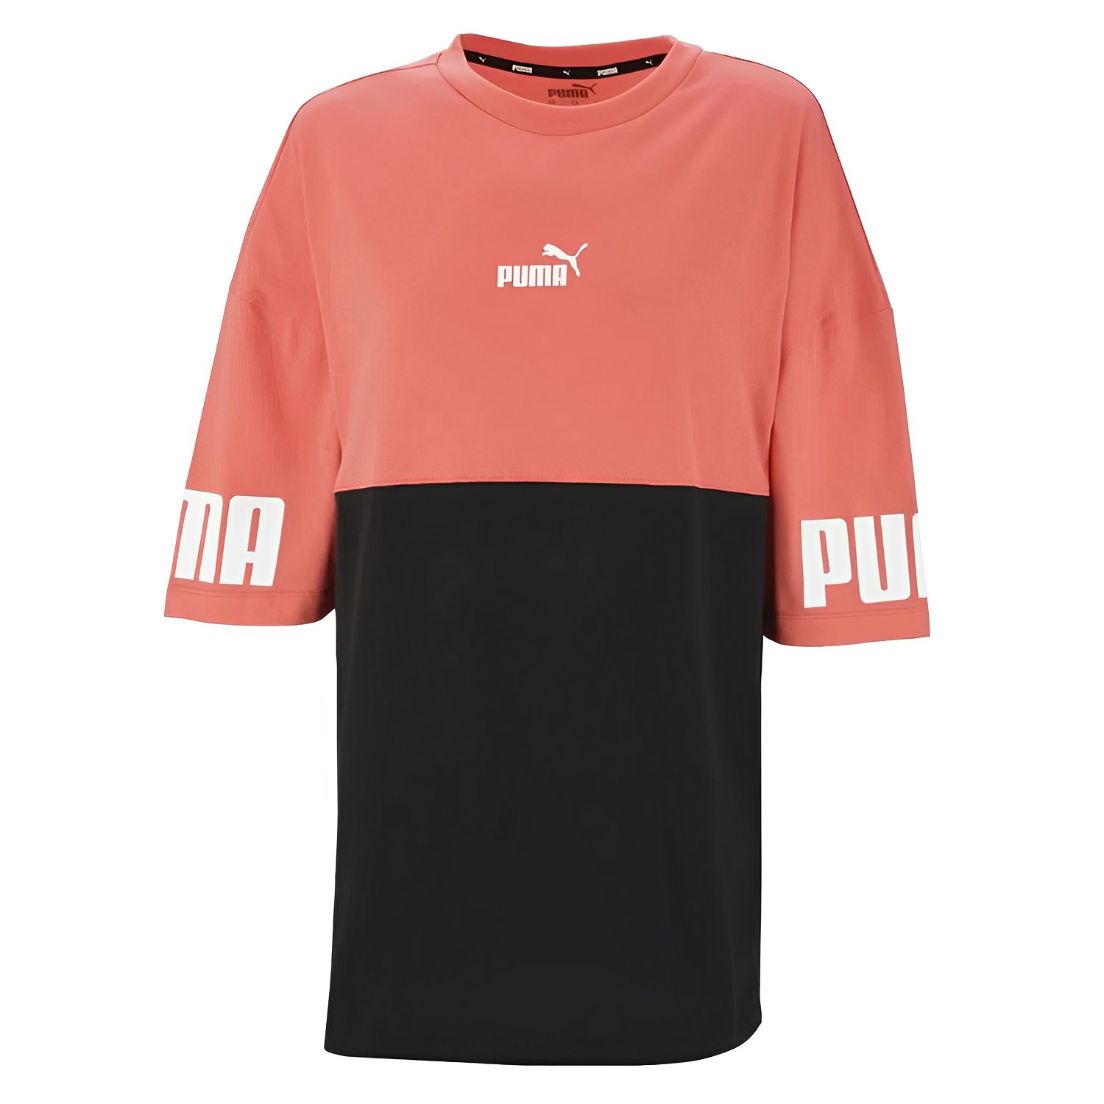 Venta de Camiseta Mujer Puma Power Colorbloc 673636-64